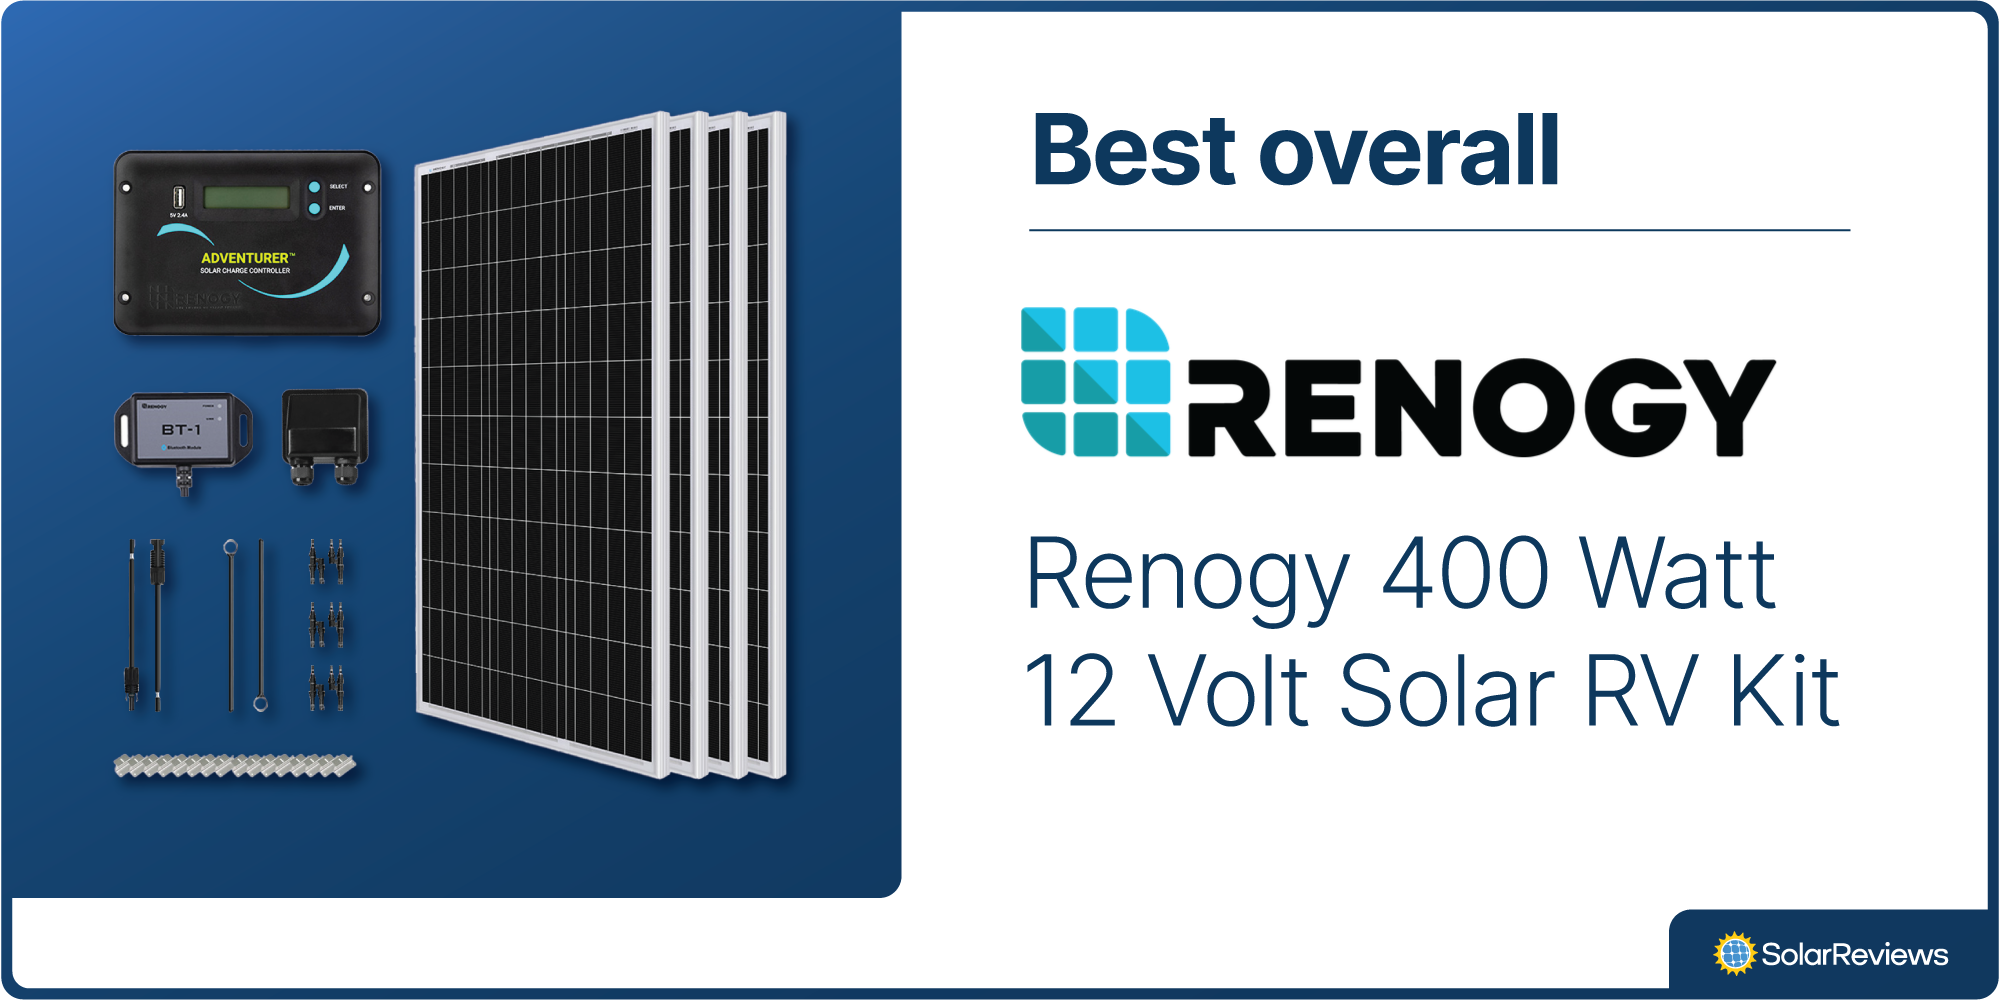 SolarReviews voted the Renogy 400 Watt 12 Volt Solar RV Kit best overall for RV solar panels